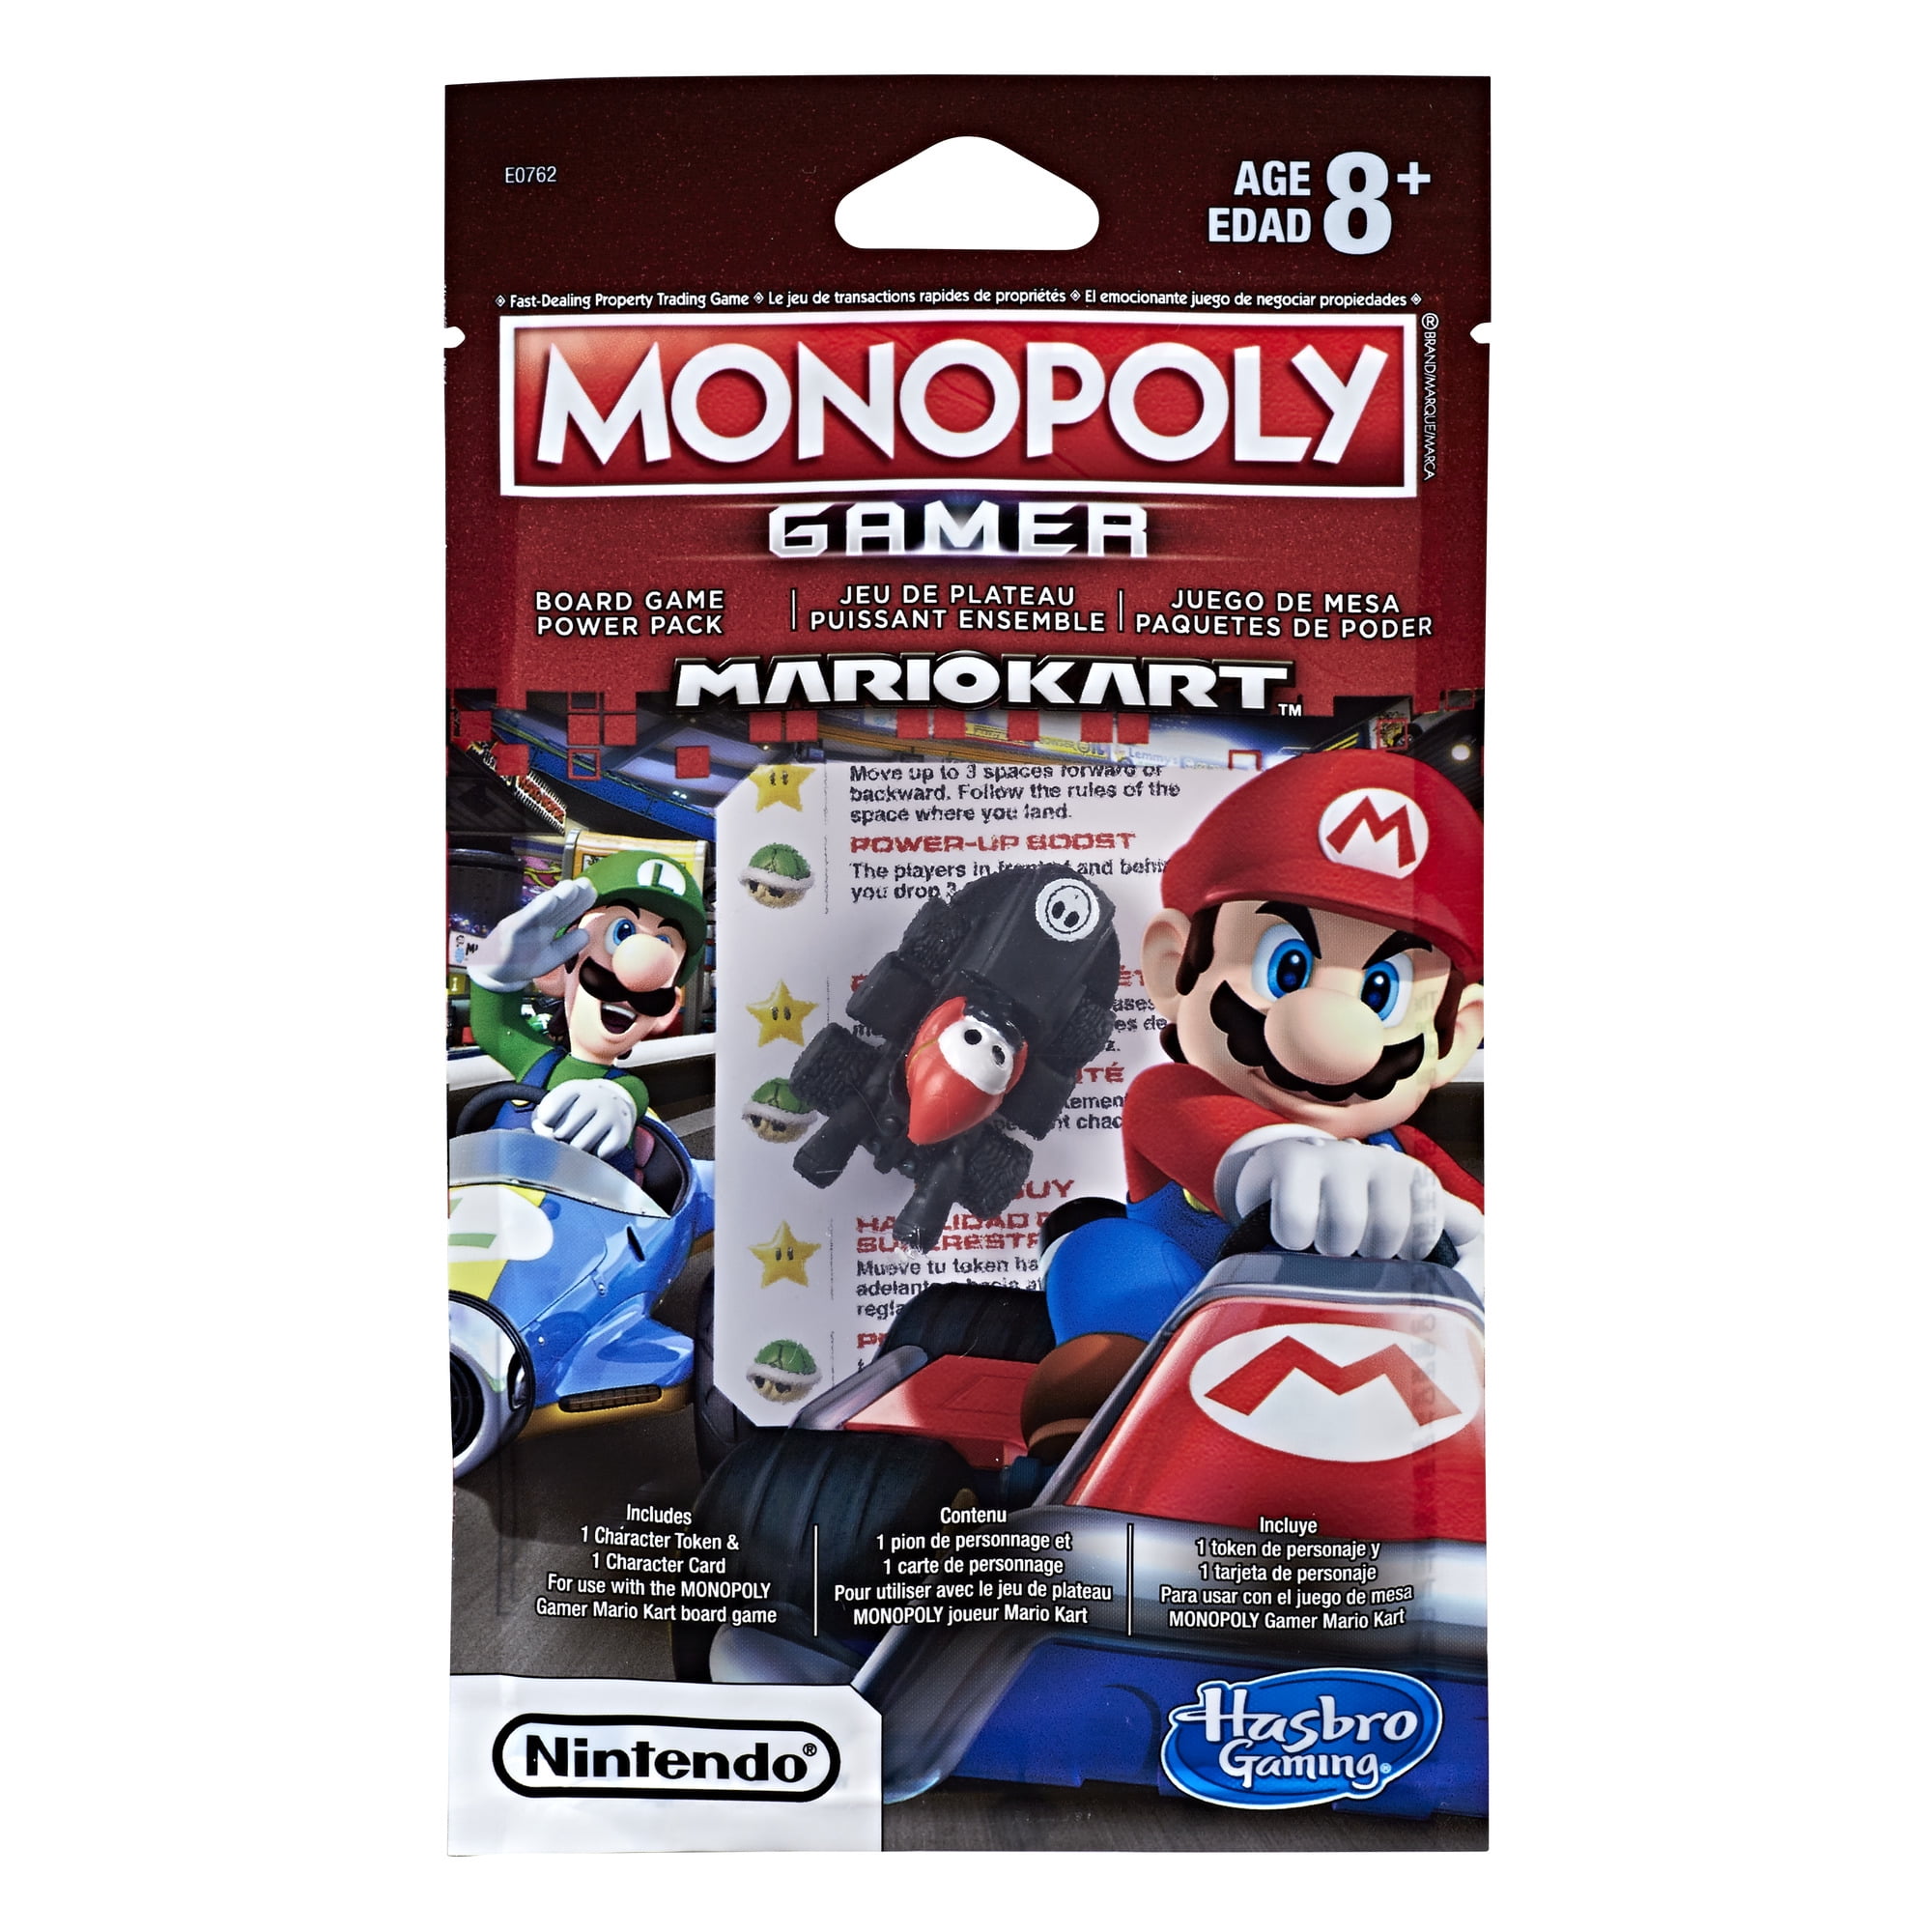 Monopoly Gamer Mario Kart Power Pack Figures to Choose